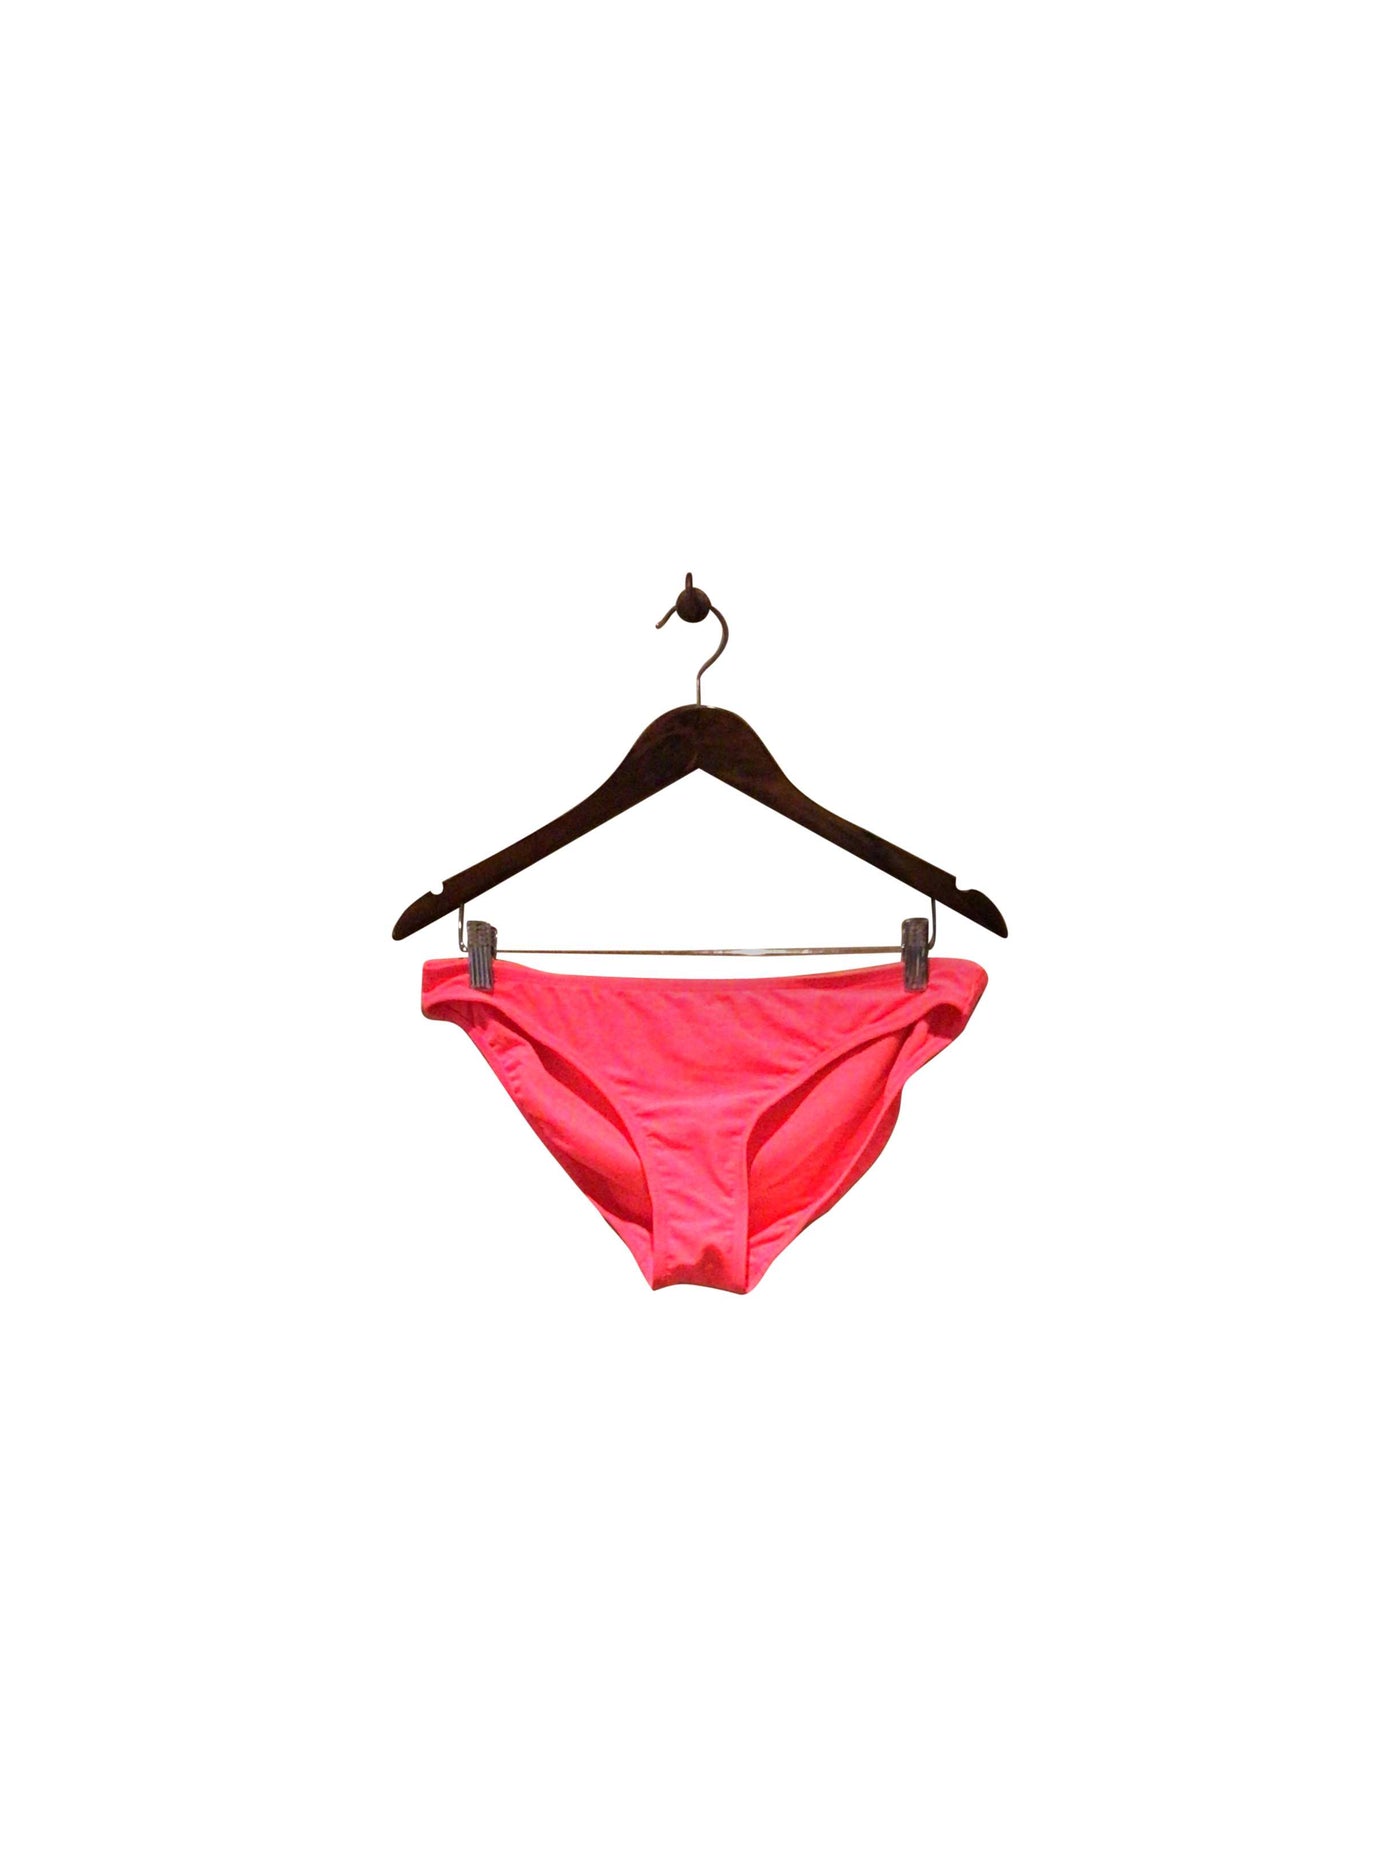 OLD NAVY Tankini Swimsuit in Pink  -  L  7.99 Koop